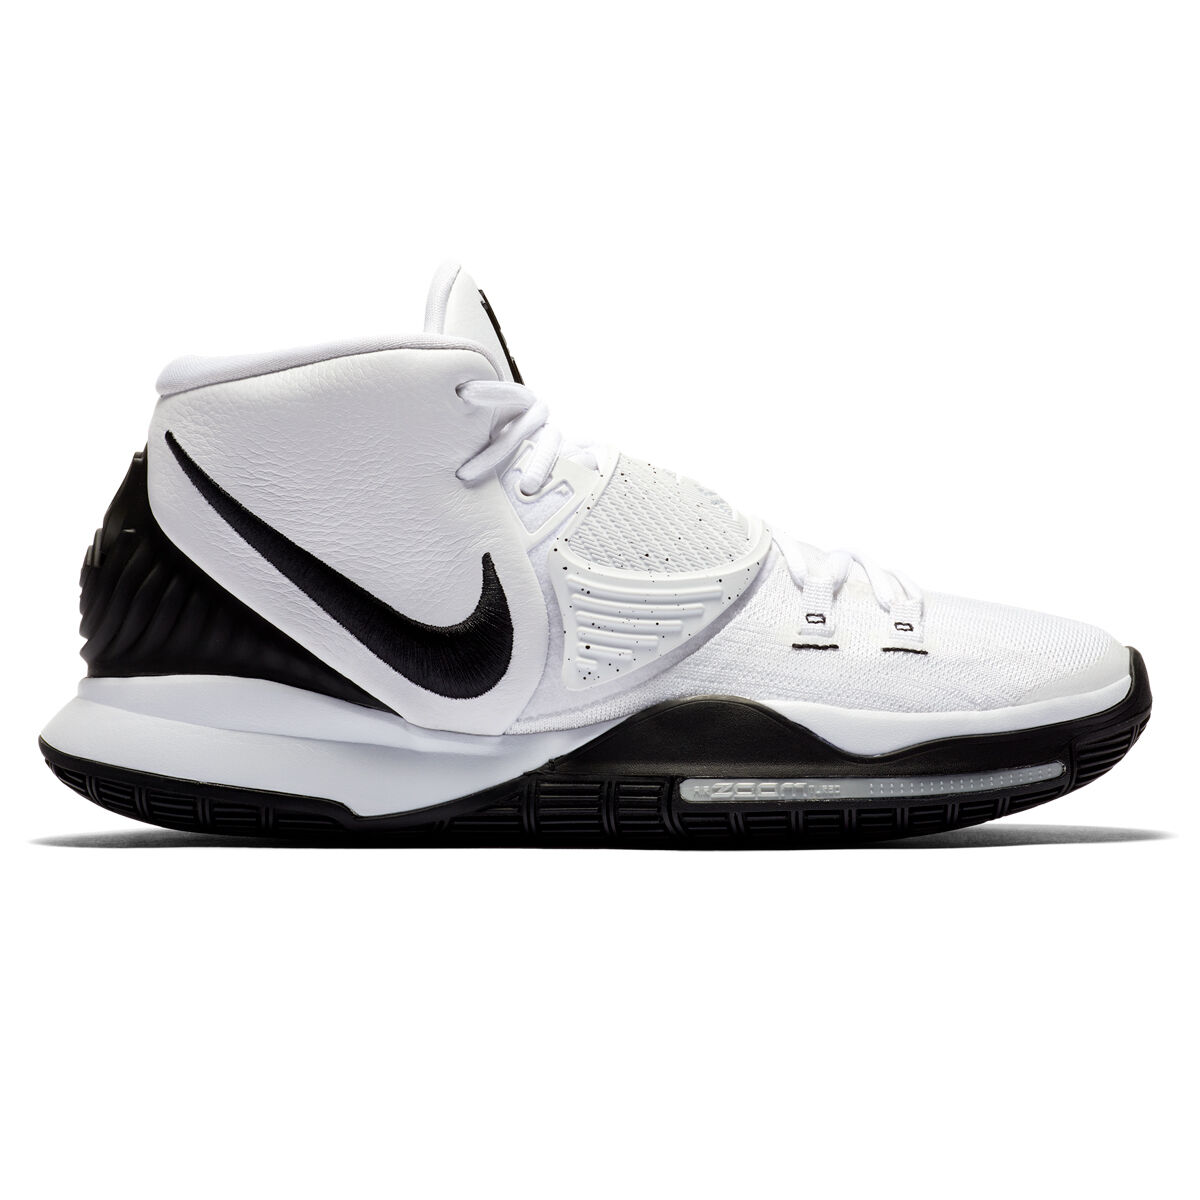 Cheap Nike Basketball Shoes India Nike Kyrie 5 Boys Black